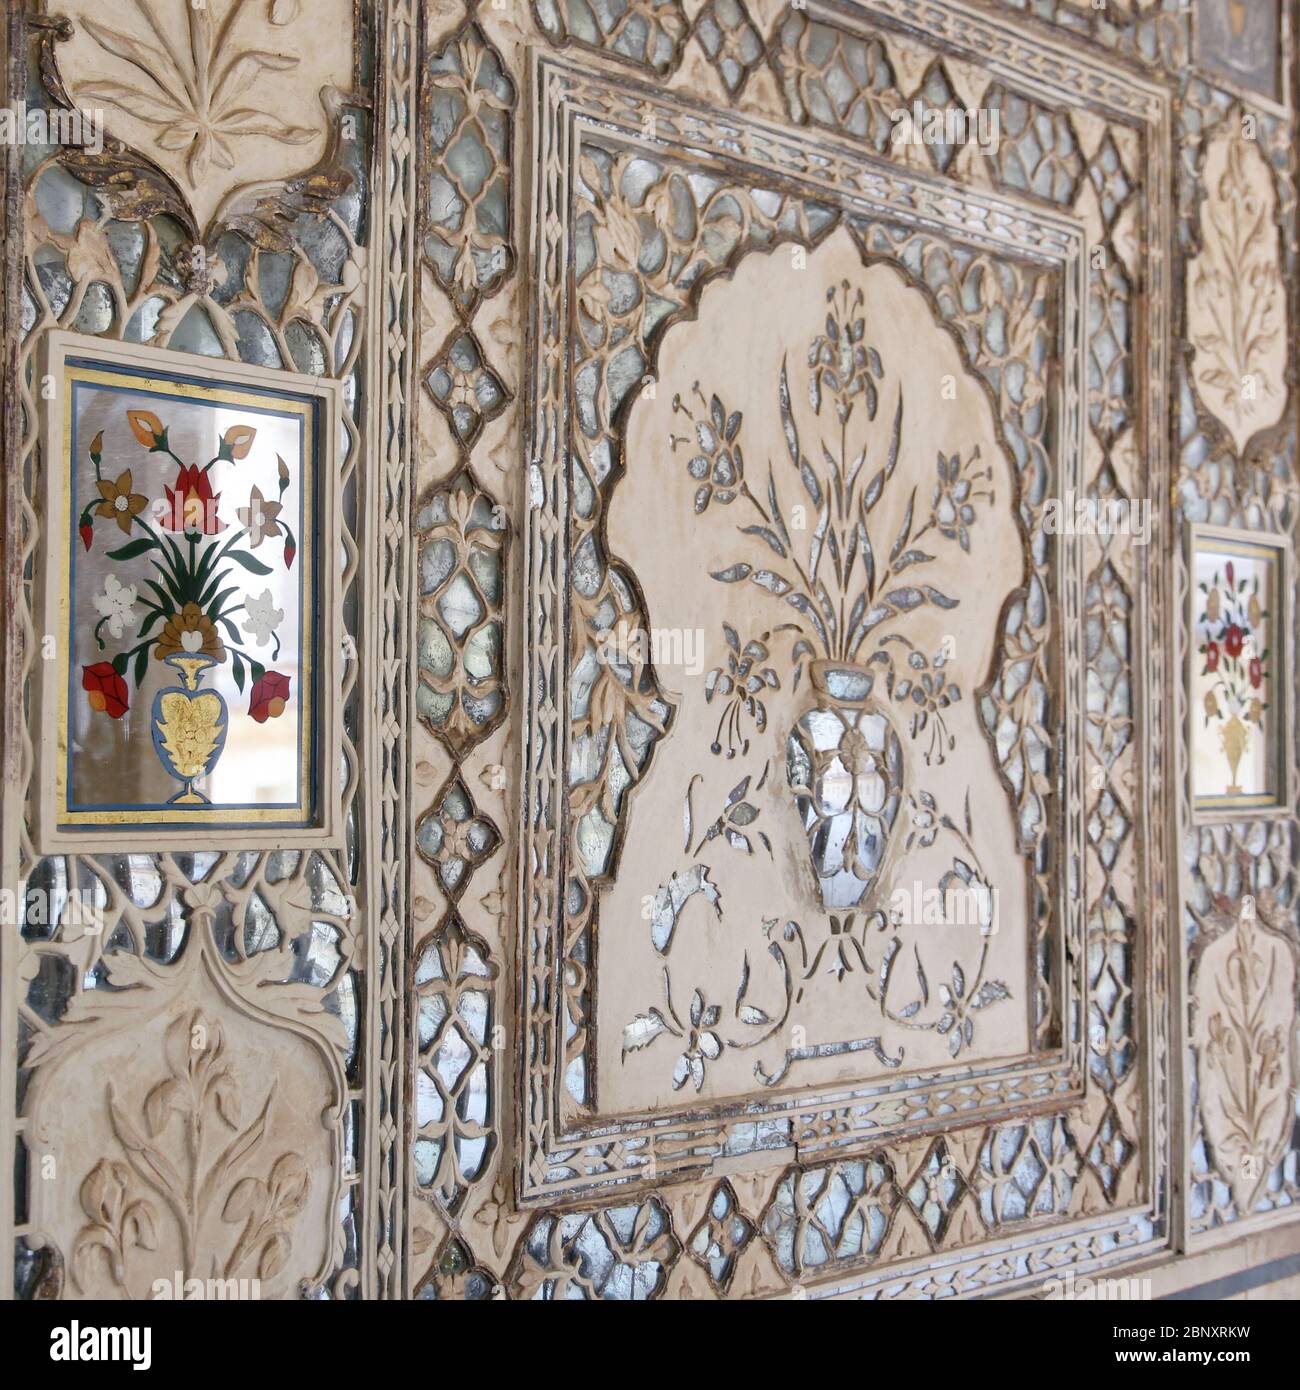 Hall of Mirrors (Sheesh Mahal) in Amber fort near Jaipur (Rajasthan, India) Stock Photo